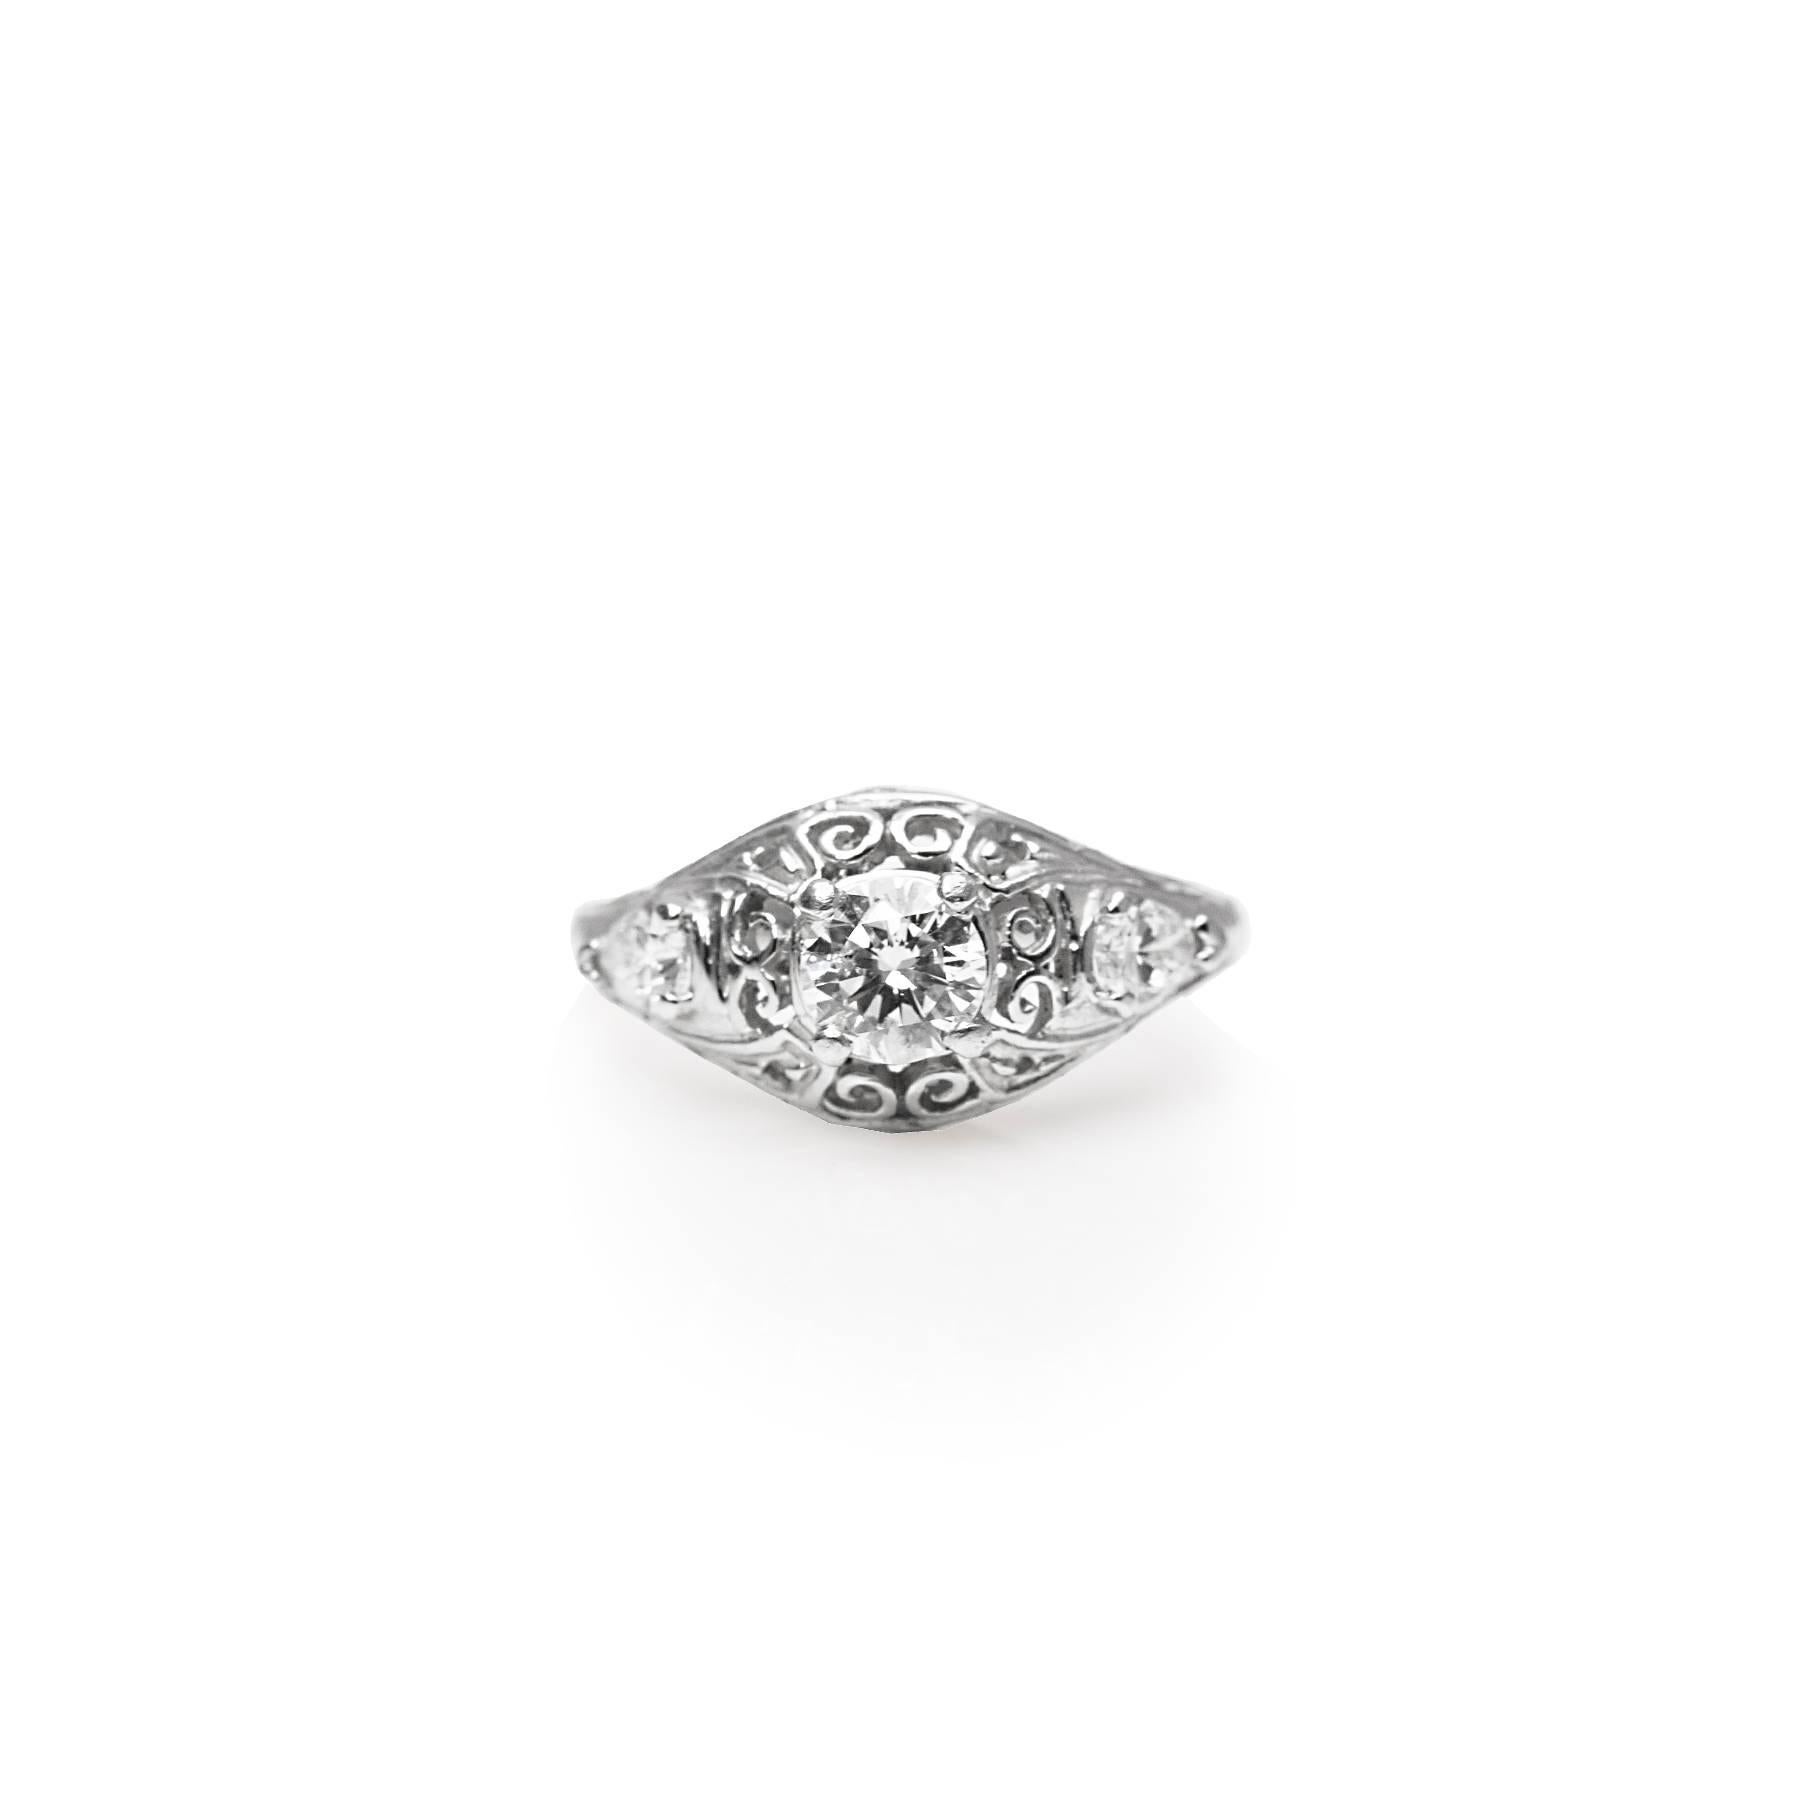 Platinum Estate Round and Pear Shaped Diamond Engagement Ring
Round Diamond = 0.50 ct; Two Pear Shape Diamonds = 0.40 ctw 